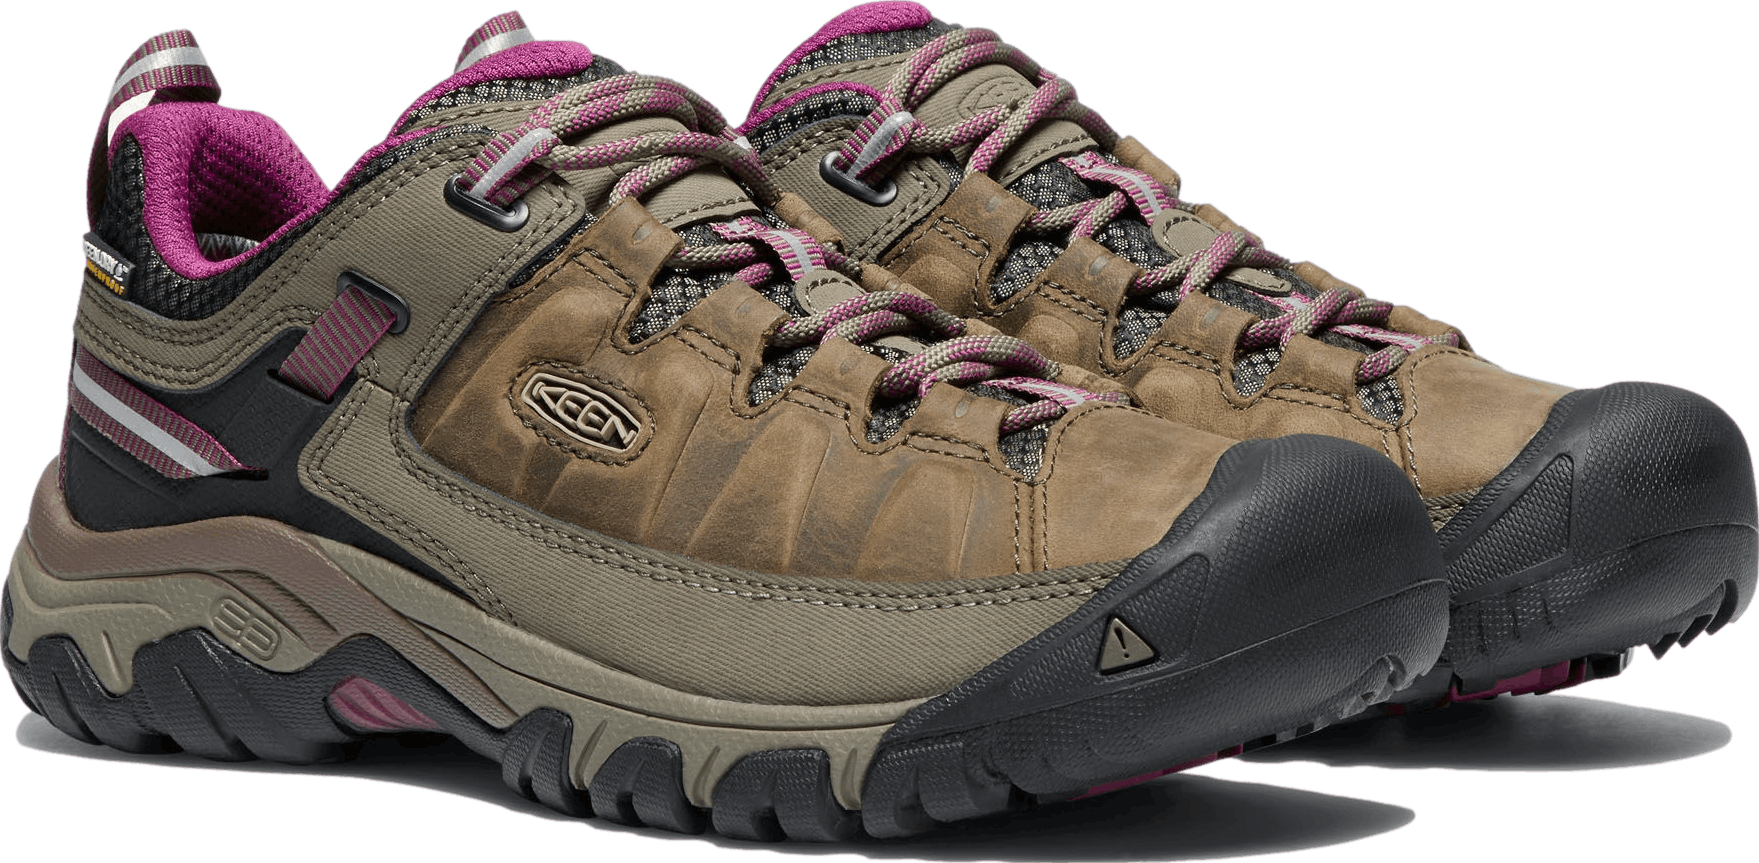 KEEN Women's Targhee III Waterproof Hiking Boots